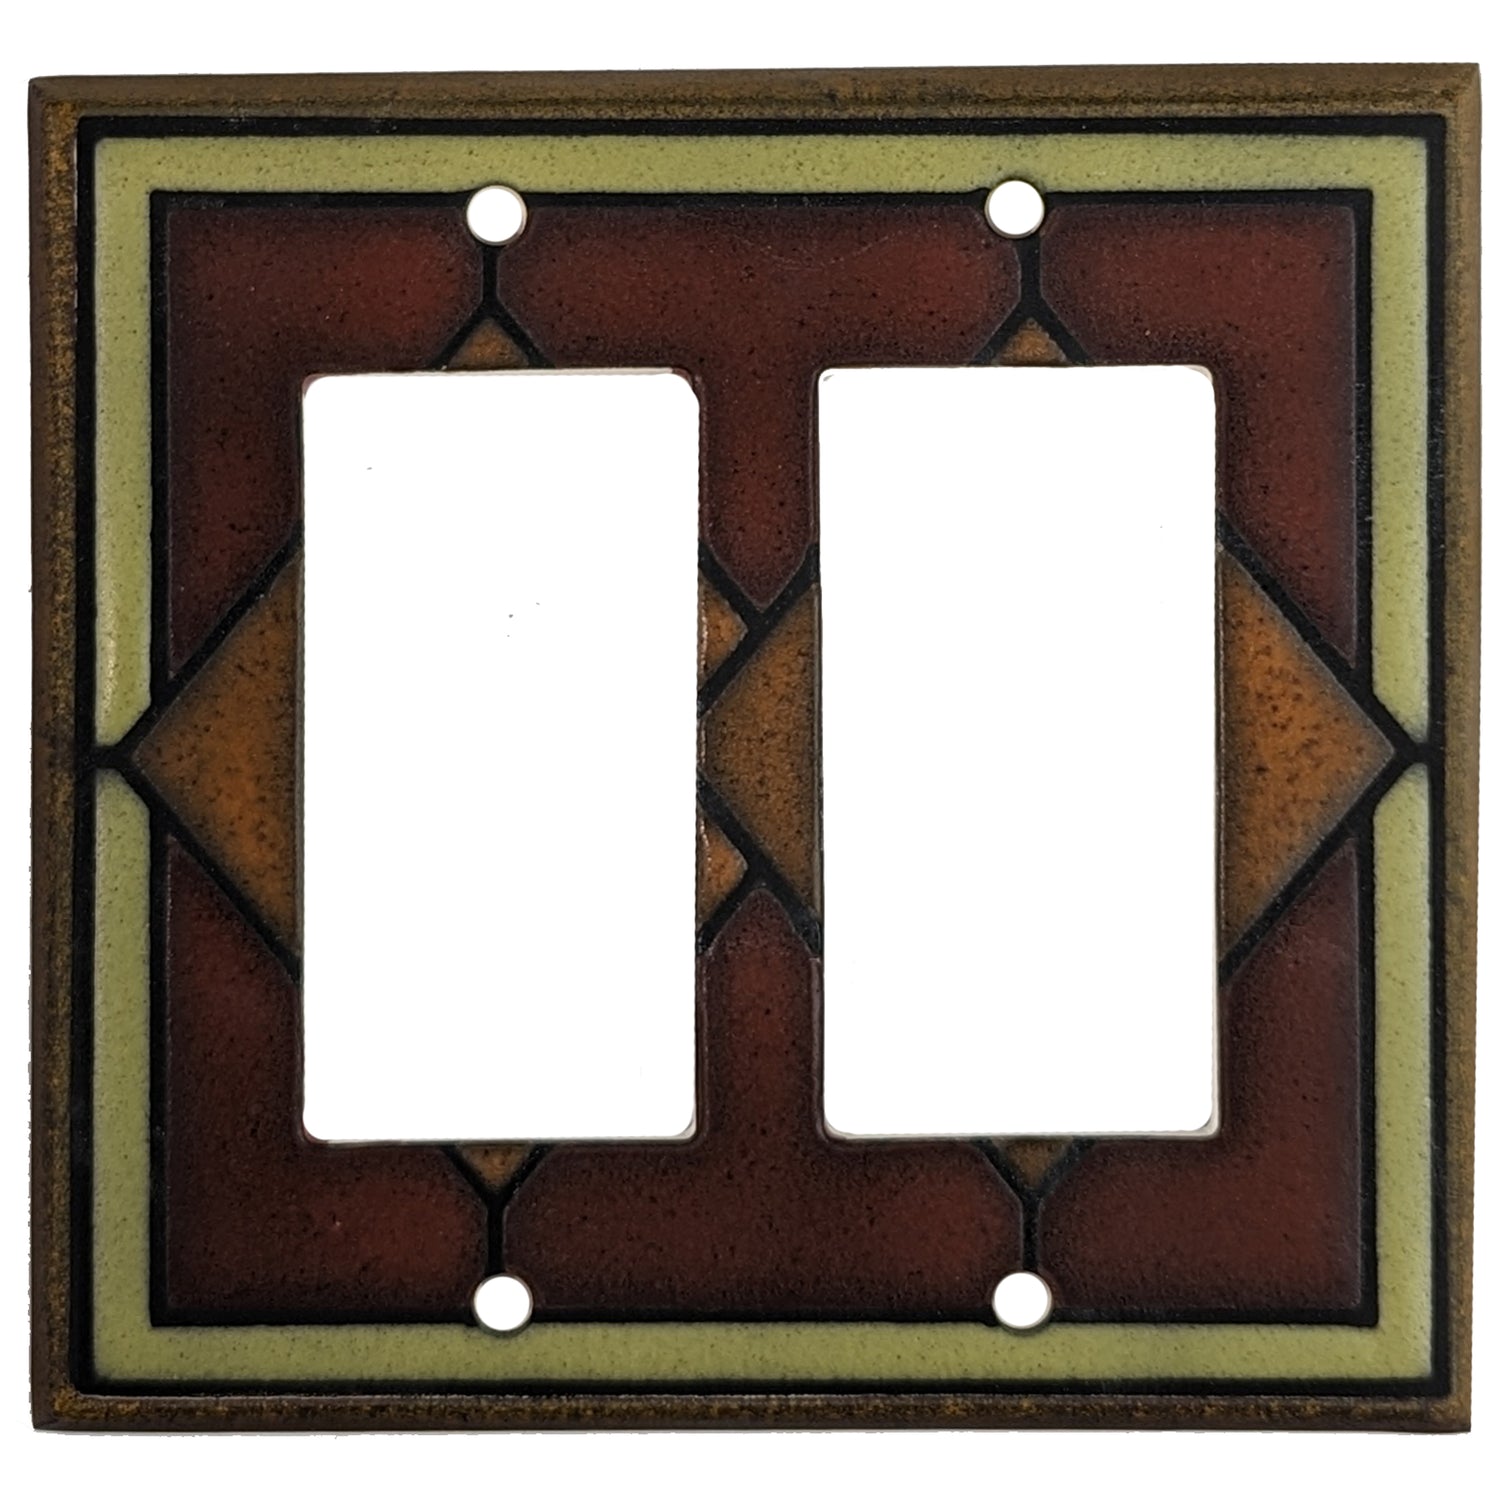 Rustic Tile Cover Plates 2 Rocker Wallplate